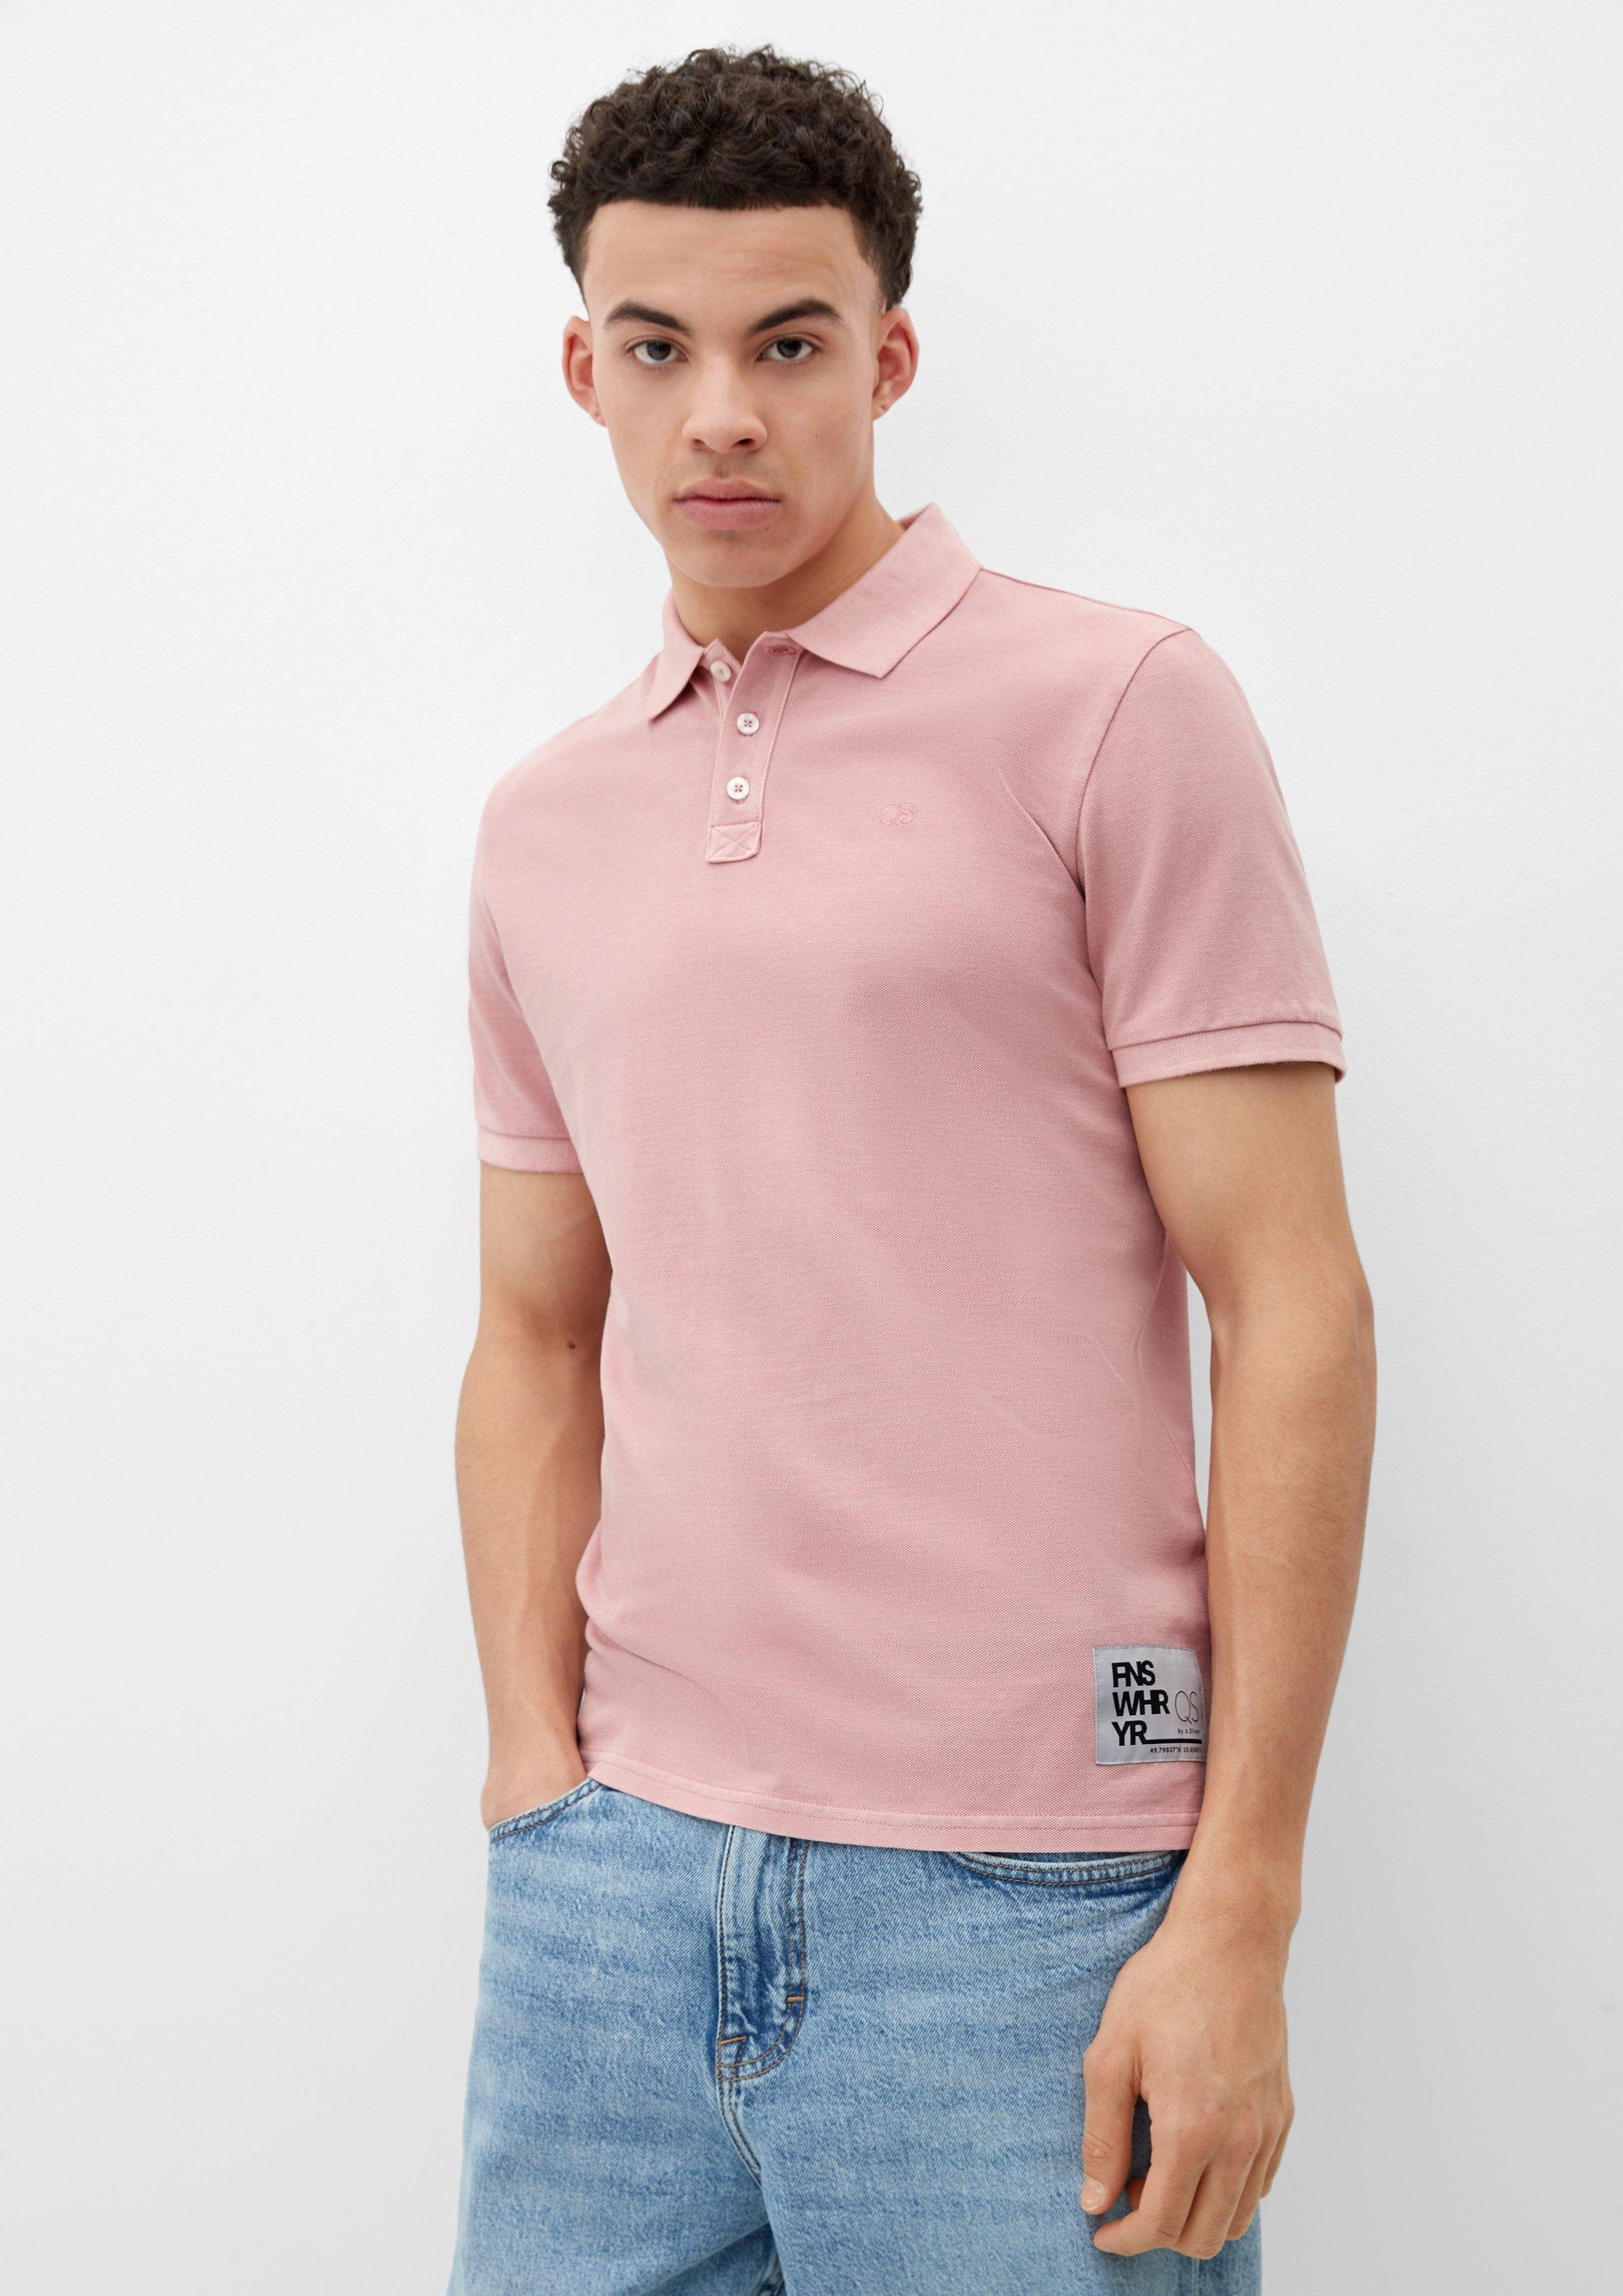 QS Poloshirt Poloshirt aus Baumwollpiqué Stickerei, Label-Patch rosa